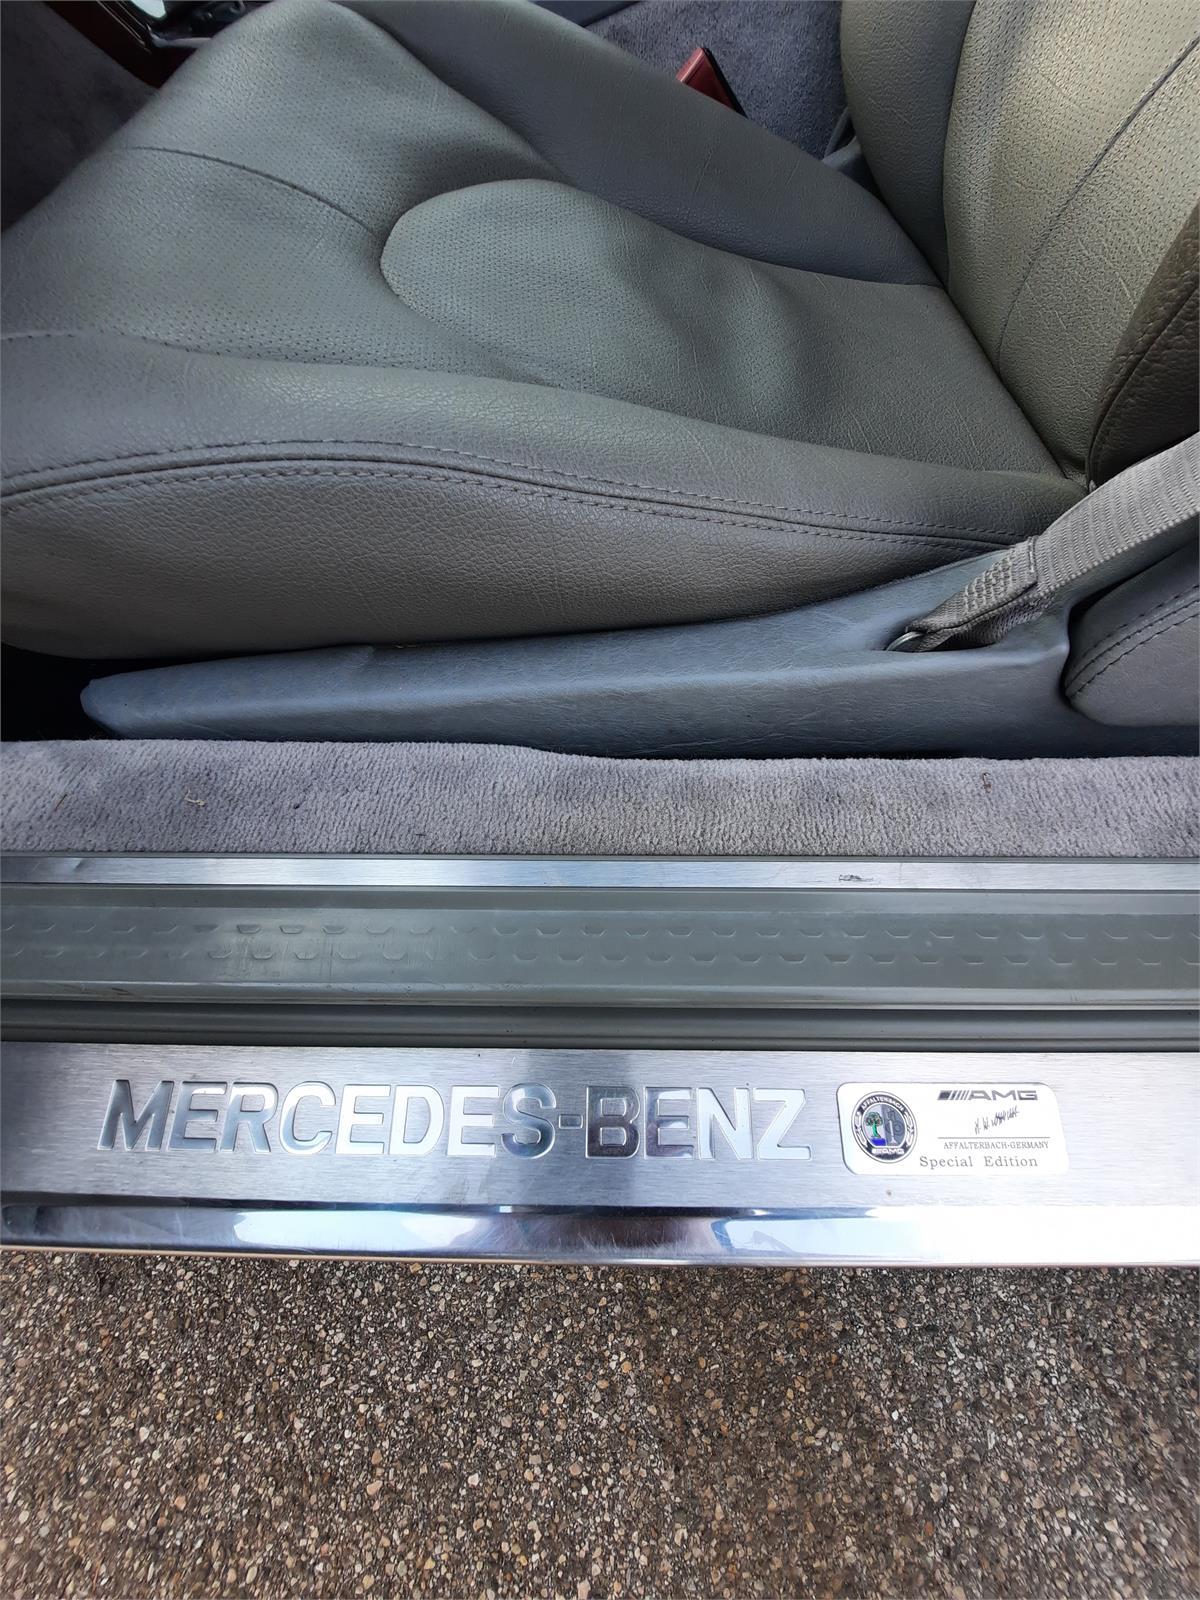 MERCEDES-BENZ SL 320 AMG SPECIAL EDITION